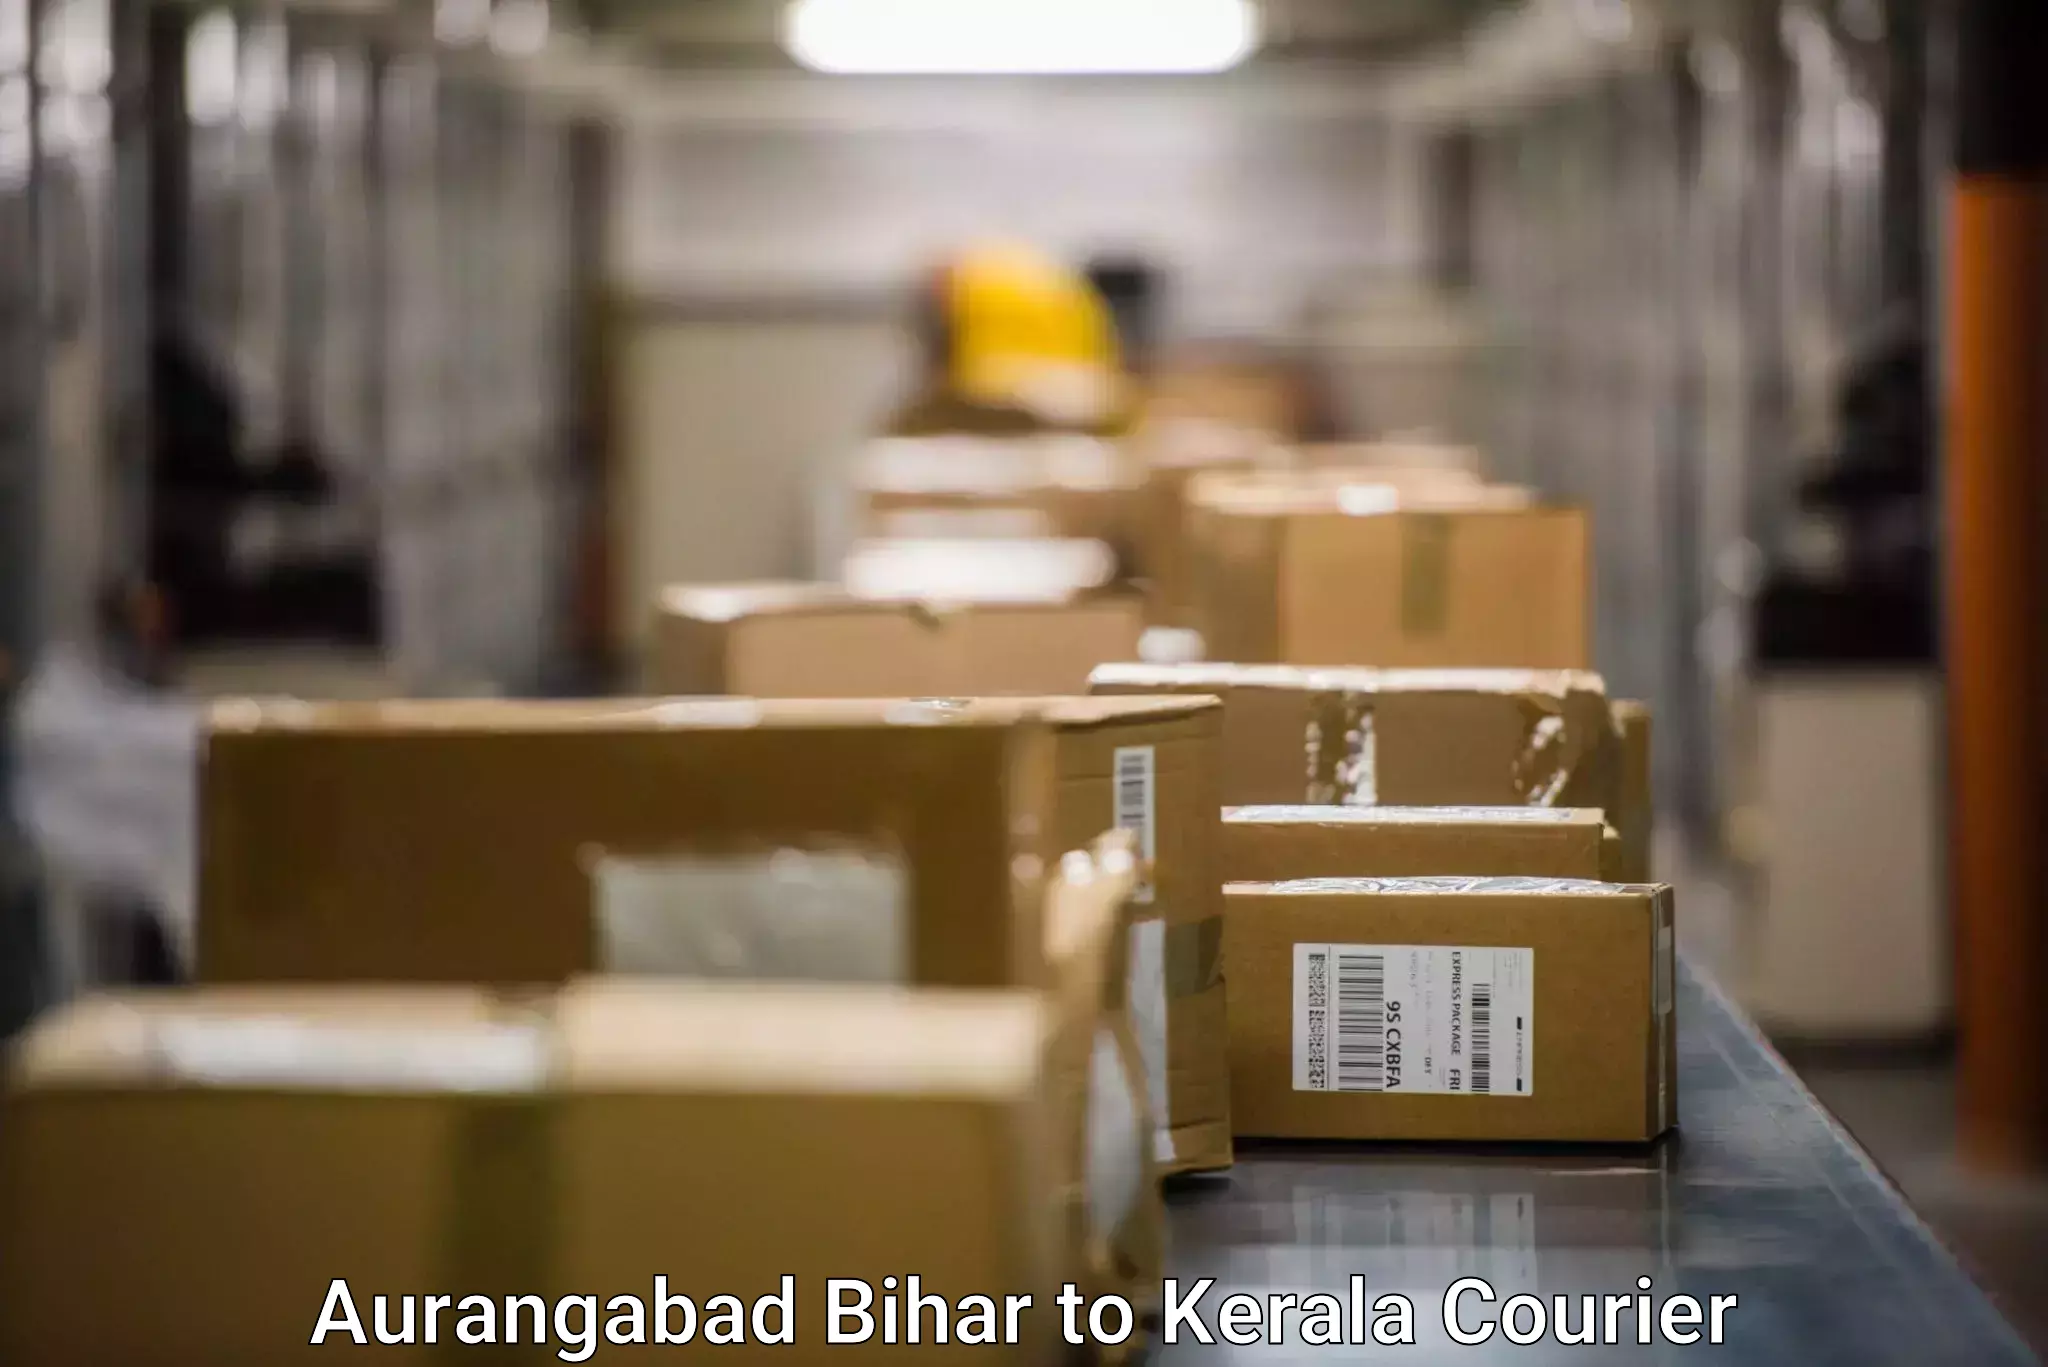 Express logistics providers Aurangabad Bihar to Kerala